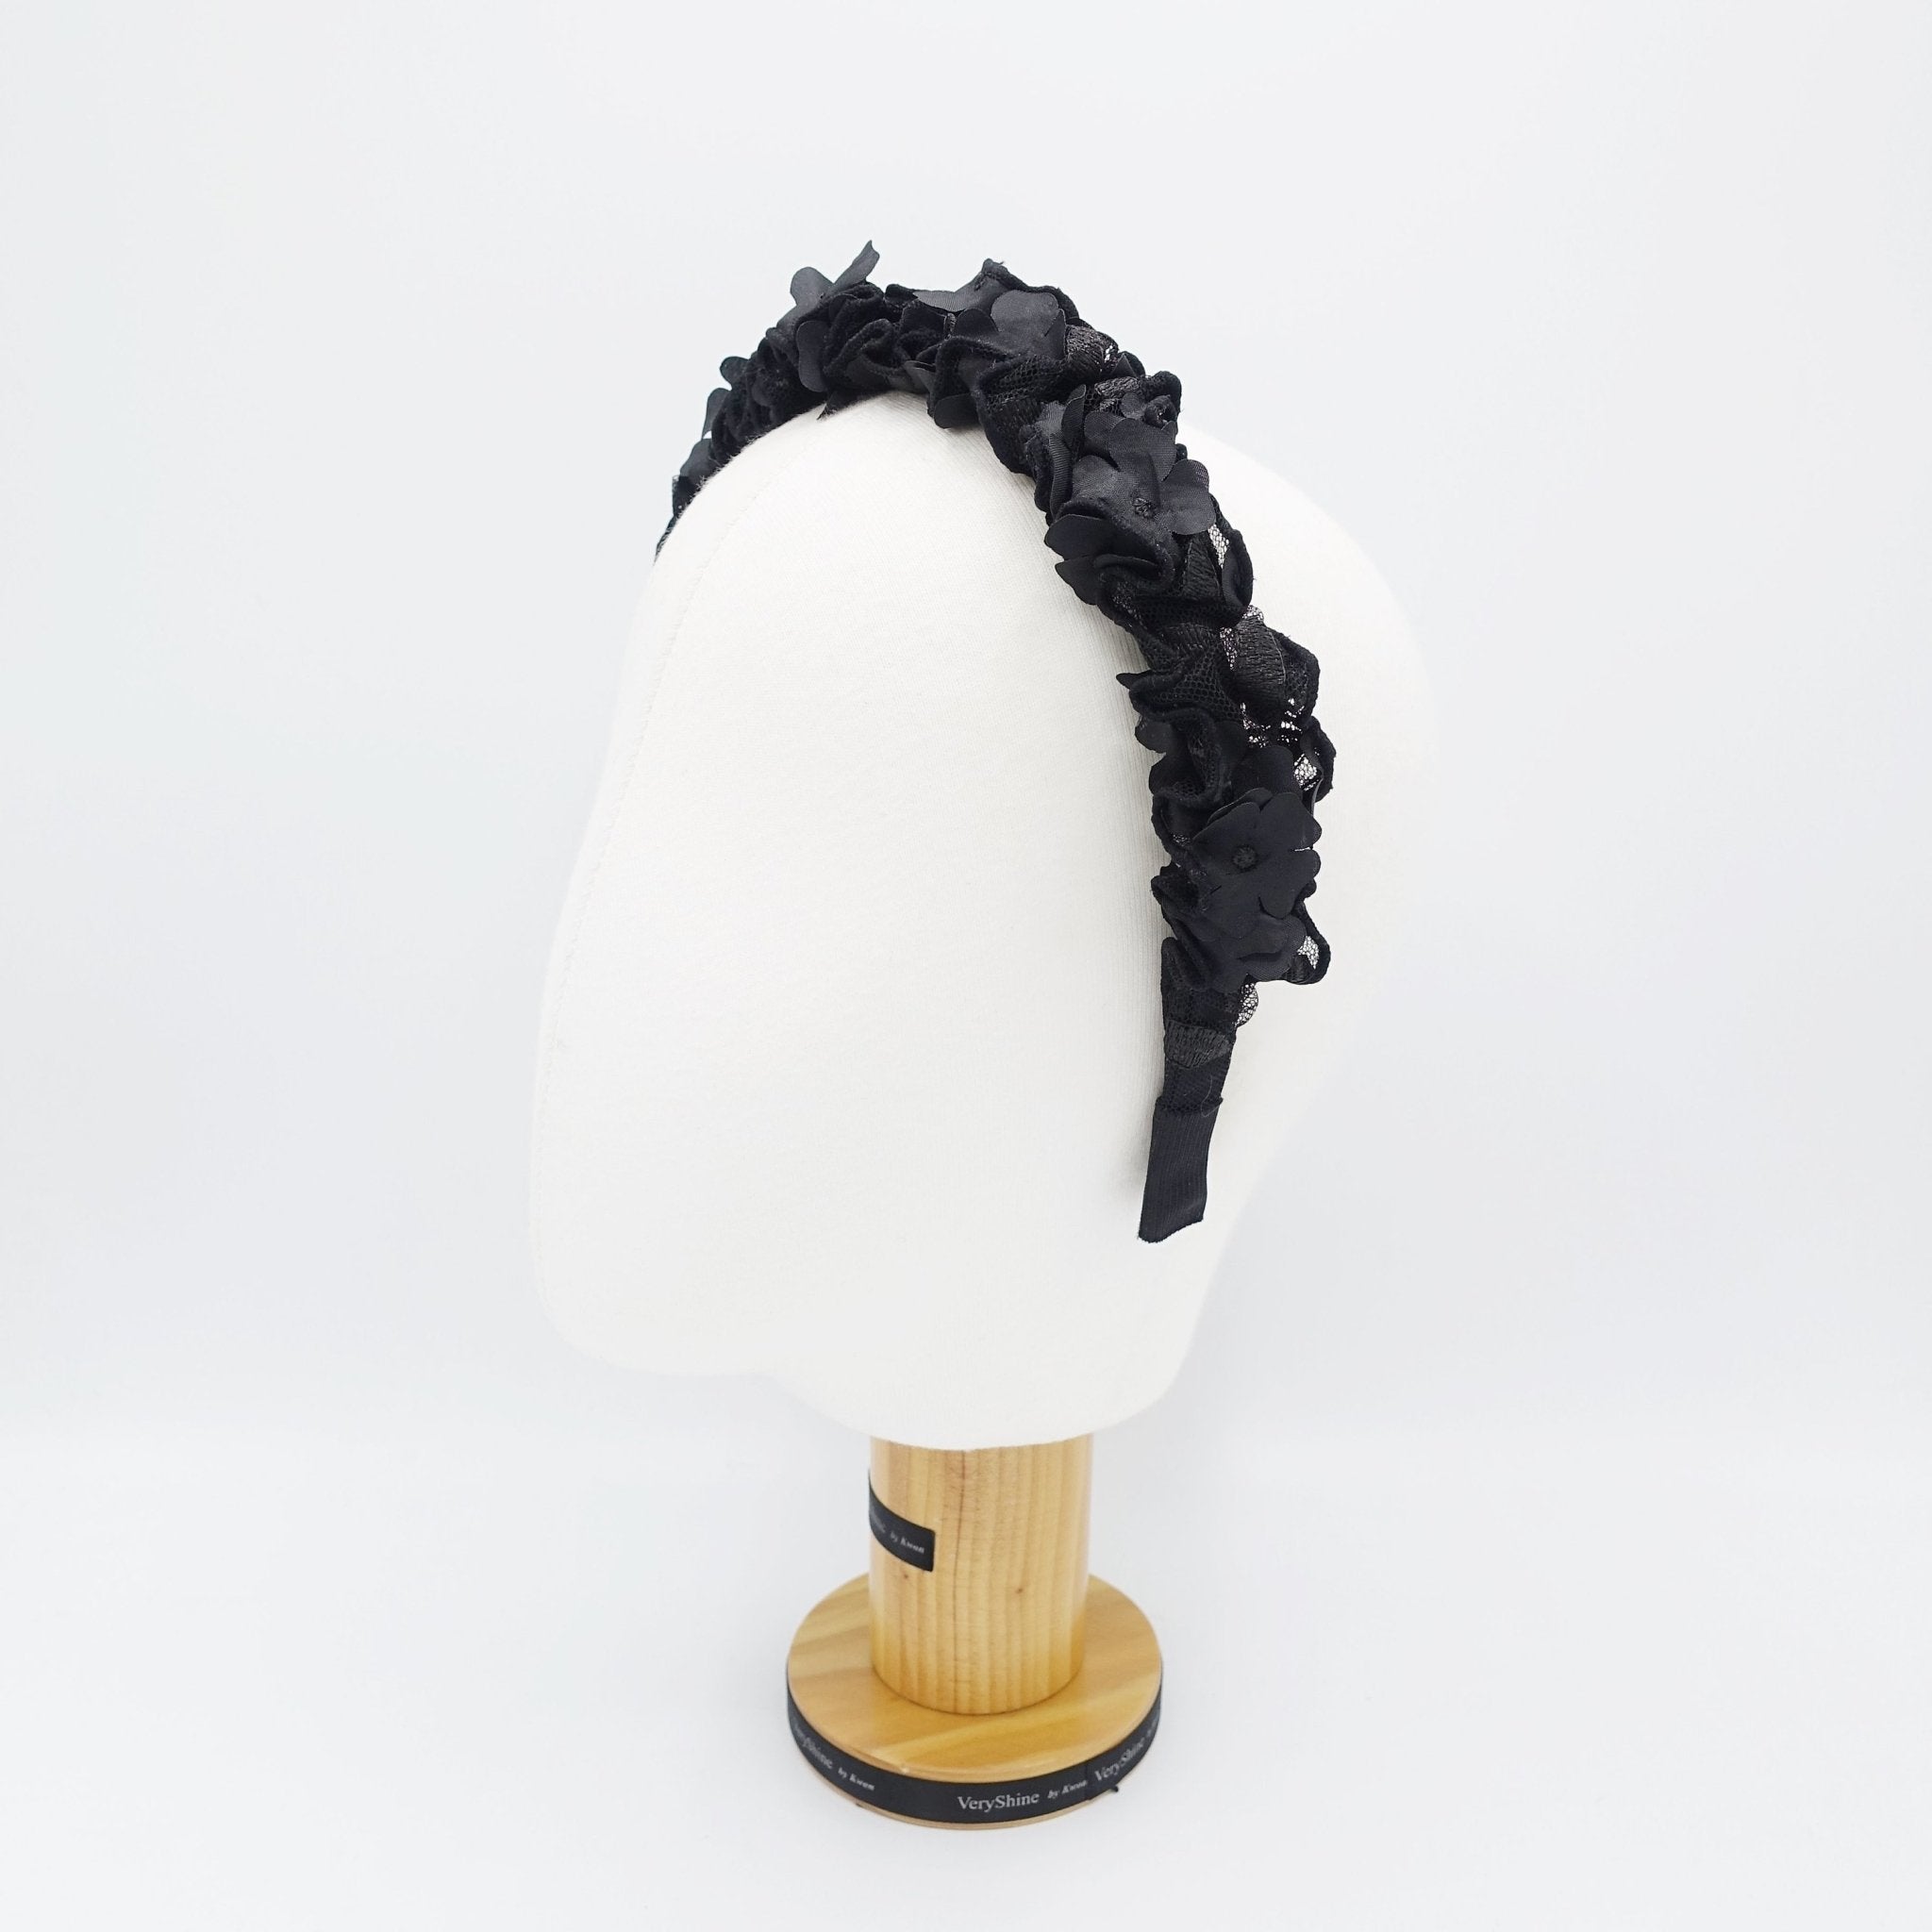 VeryShine mesh flower ruched headband petal hairband women hair accessory